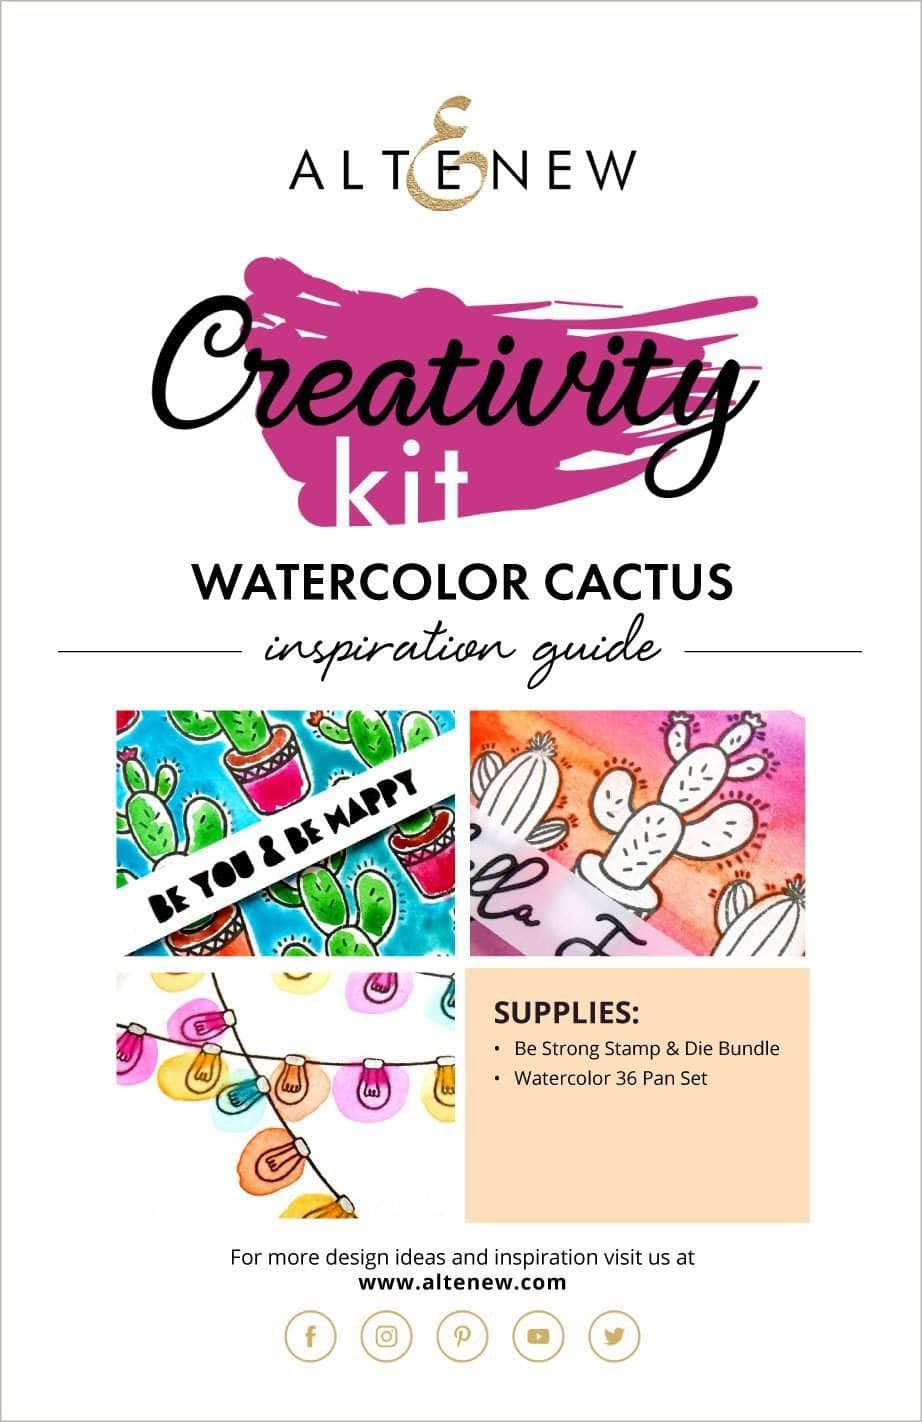 Printed Media Watercolor Cactus Creativity Kit Inspiration Guide